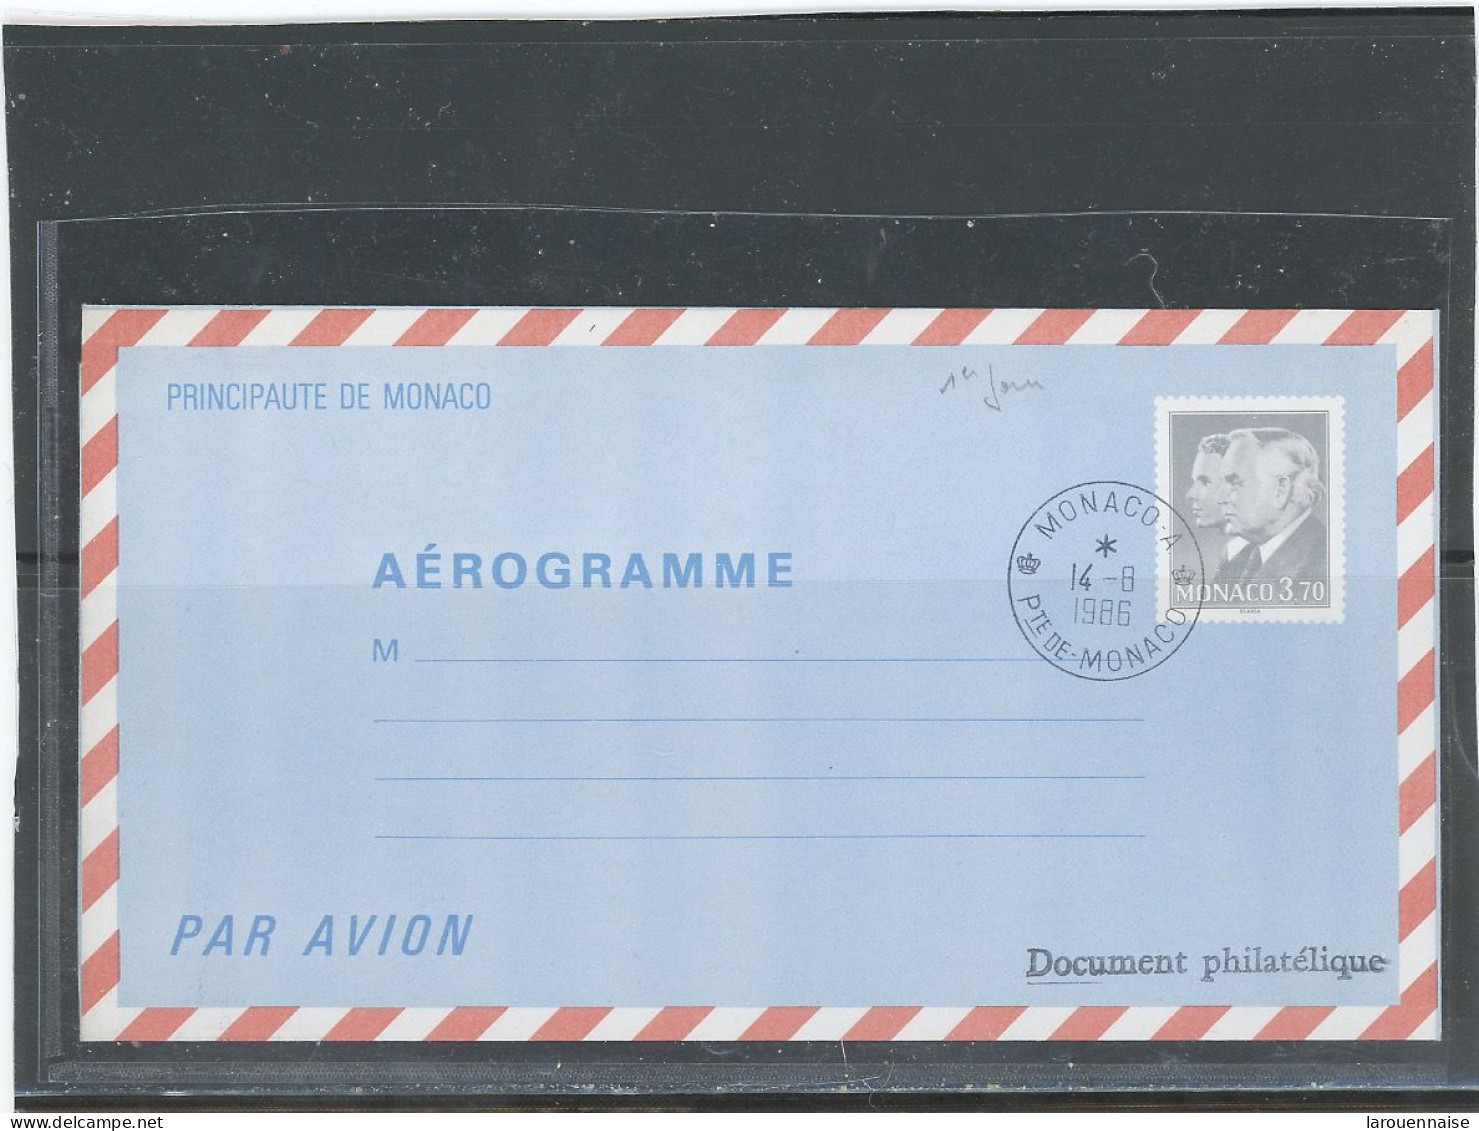 MONACO-AEROGRAMME  - N°507 - 3,70 F -RAINIER -ALBERT -Obl 1er JOUR 14-8--86 - Ganzsachen